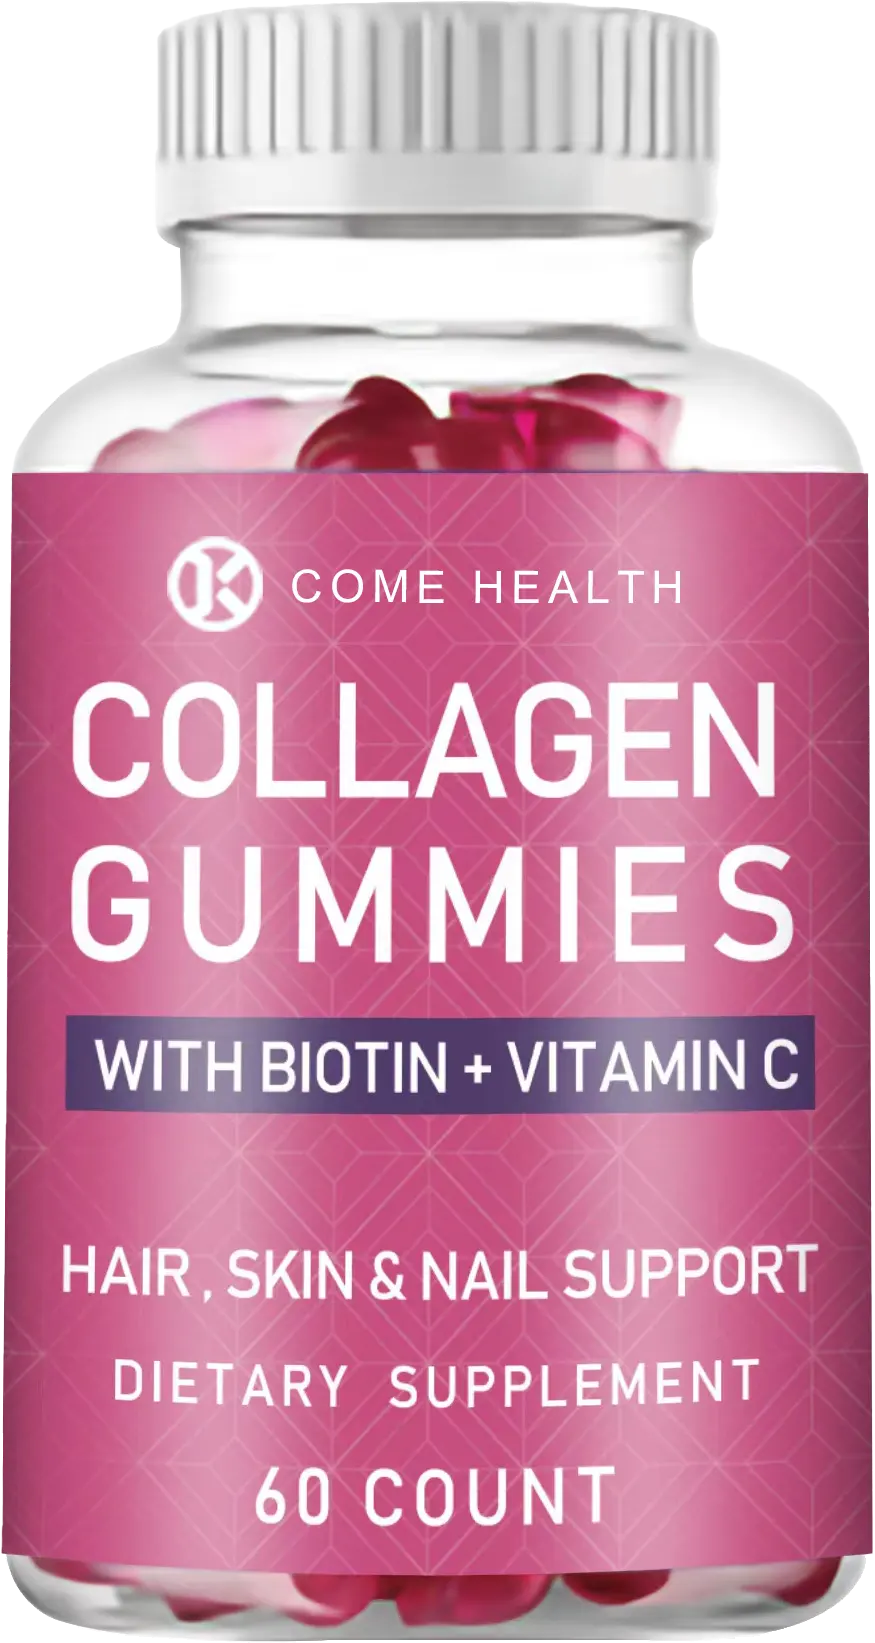 Oem bán buôn Collagen Gummies với Biotin & Vitamin C cho chăm sóc da & tóc Nail hỗ trợ làm trắng da Gummies